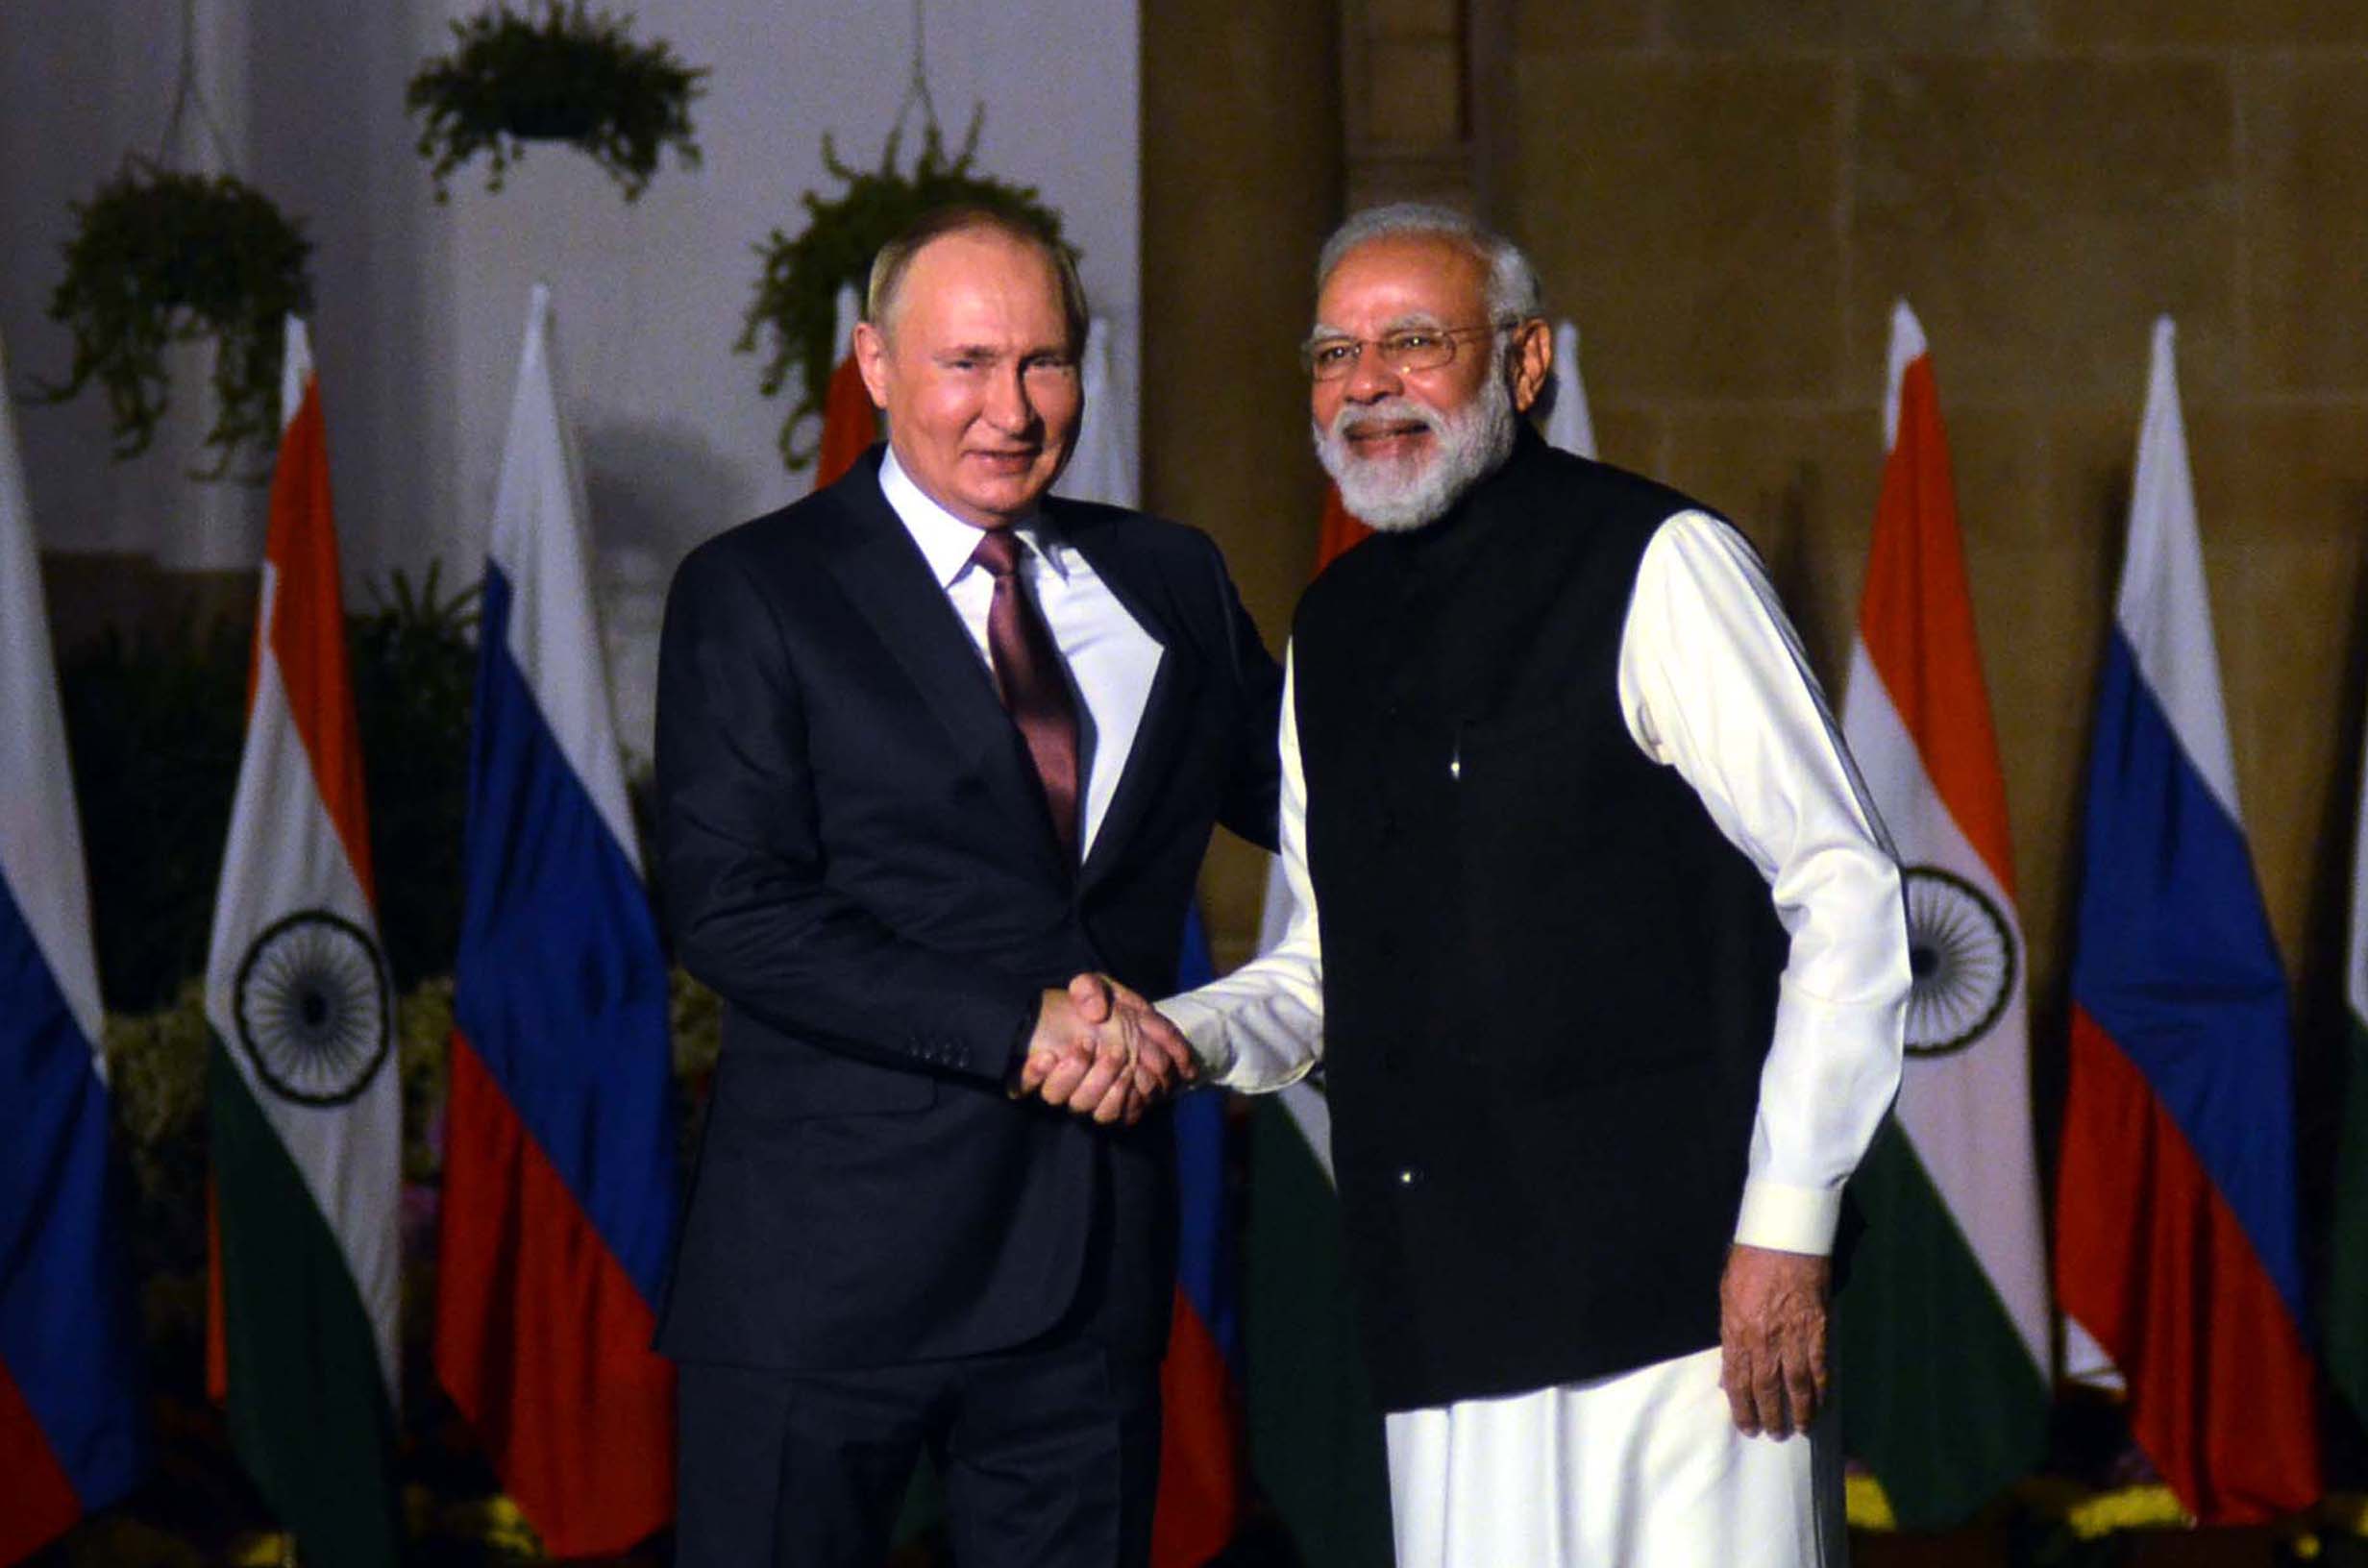 Putin says PM Modi wants peaceful resolution of Ukraine issue, invites him to visit Russia